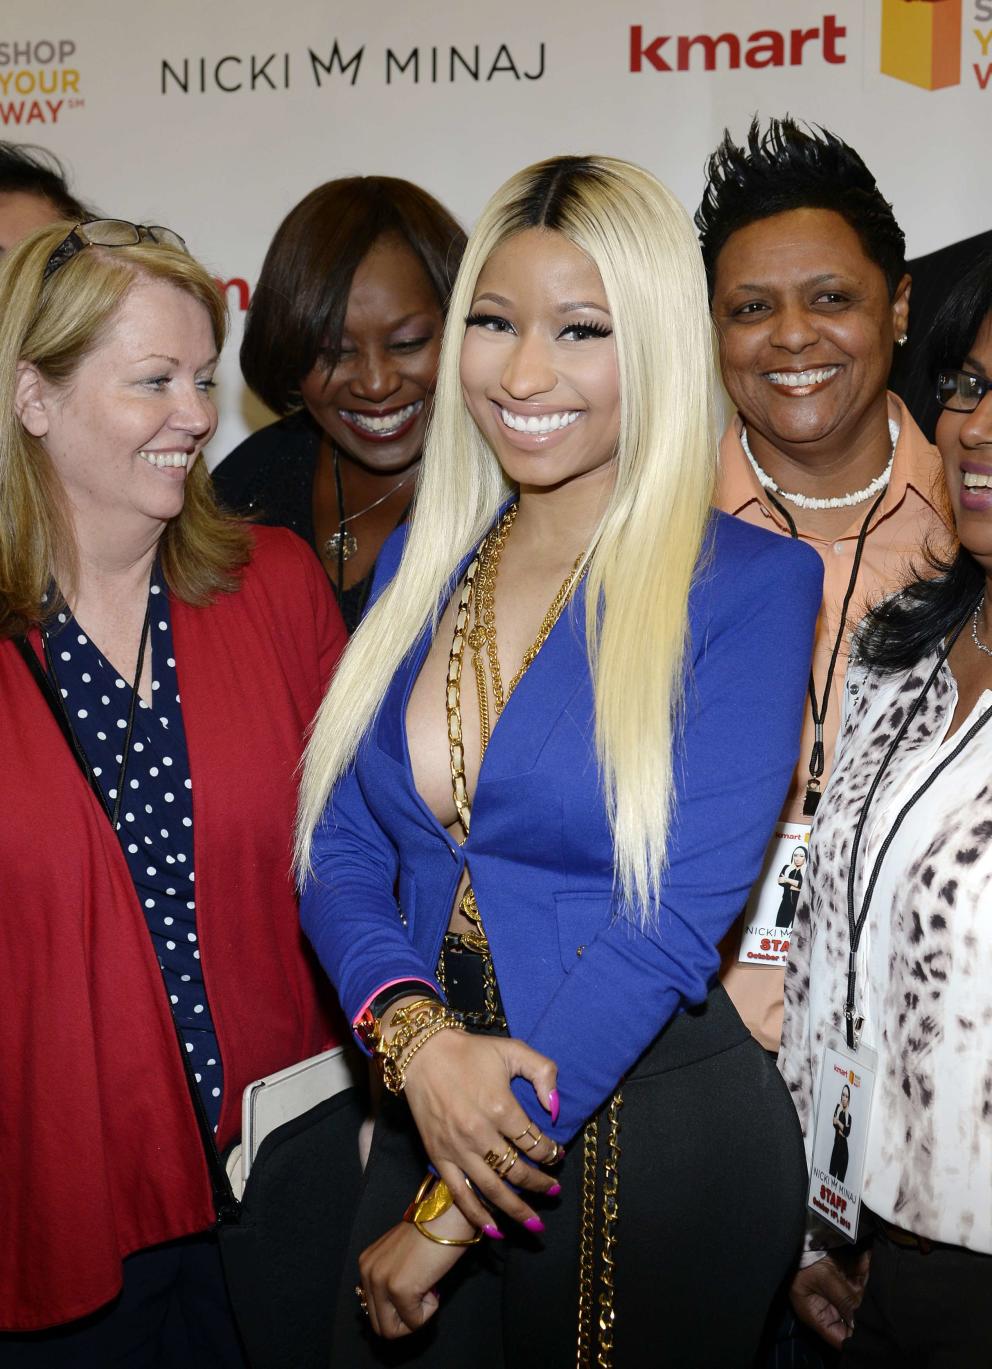 Singer Nicki Minaj launches her fashion line at Kmart in Los Angeles, California